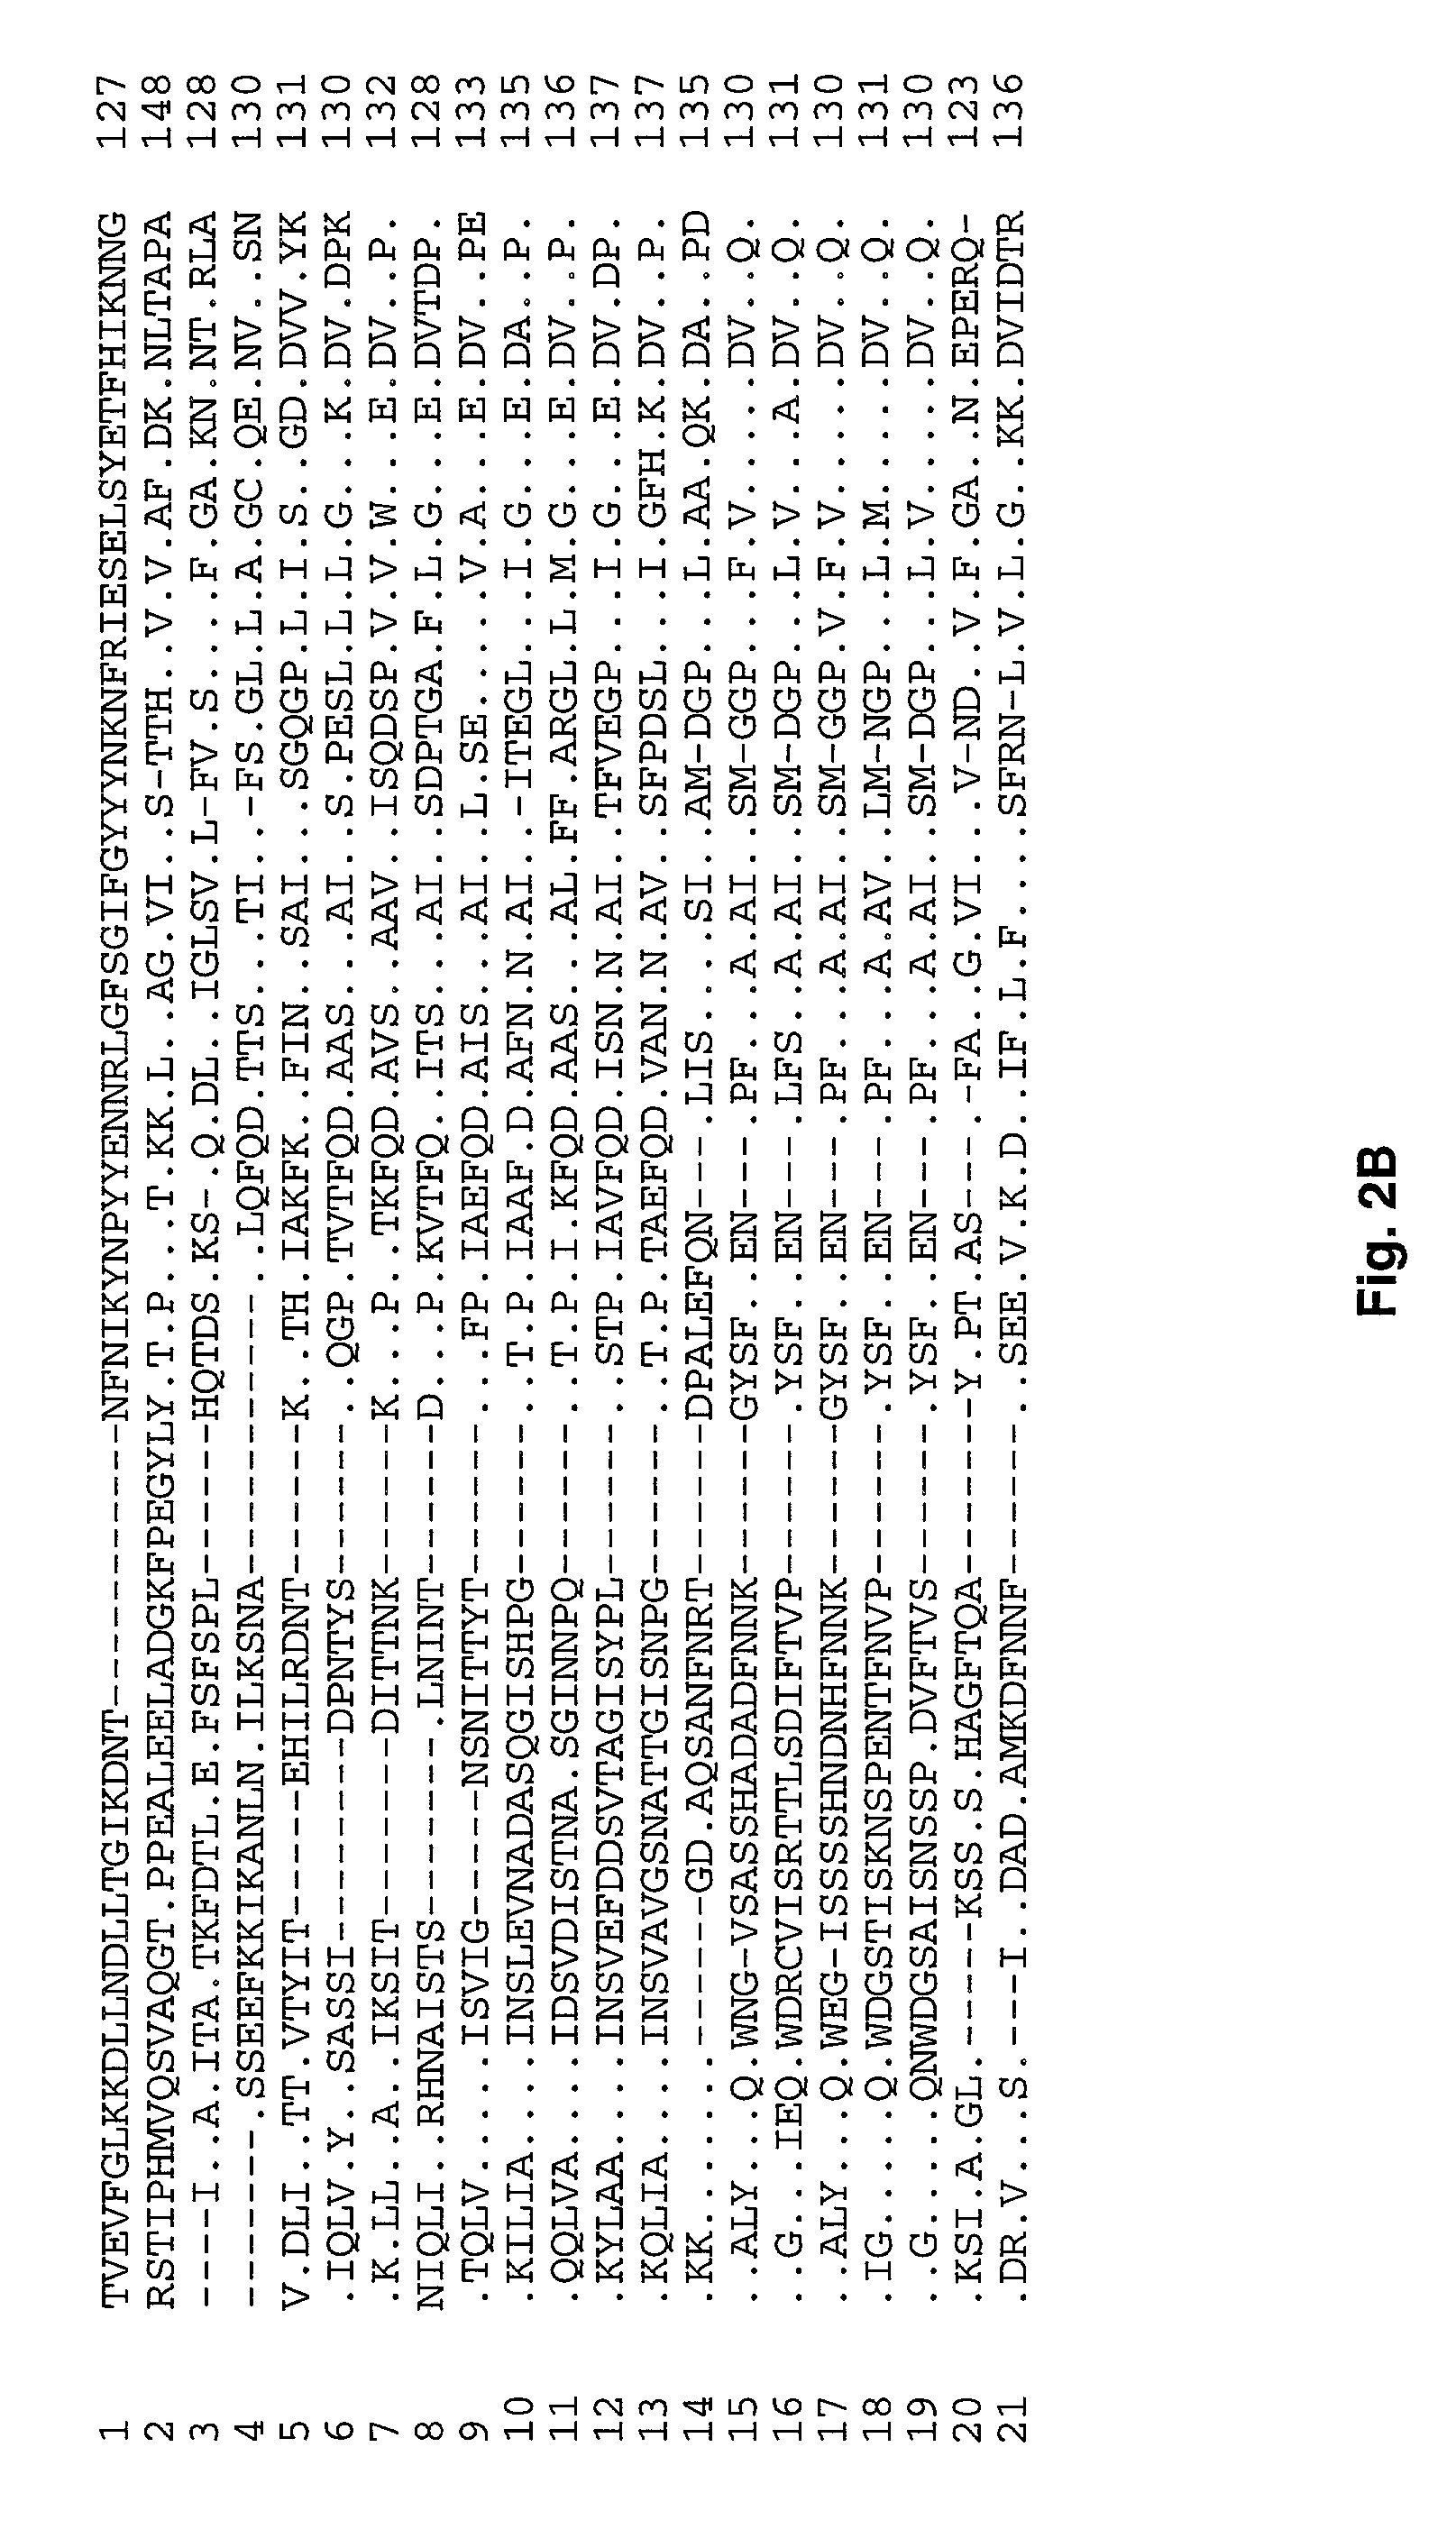 Ehrlichia chaffeensis 28 kDa outer membrane protein multigene family